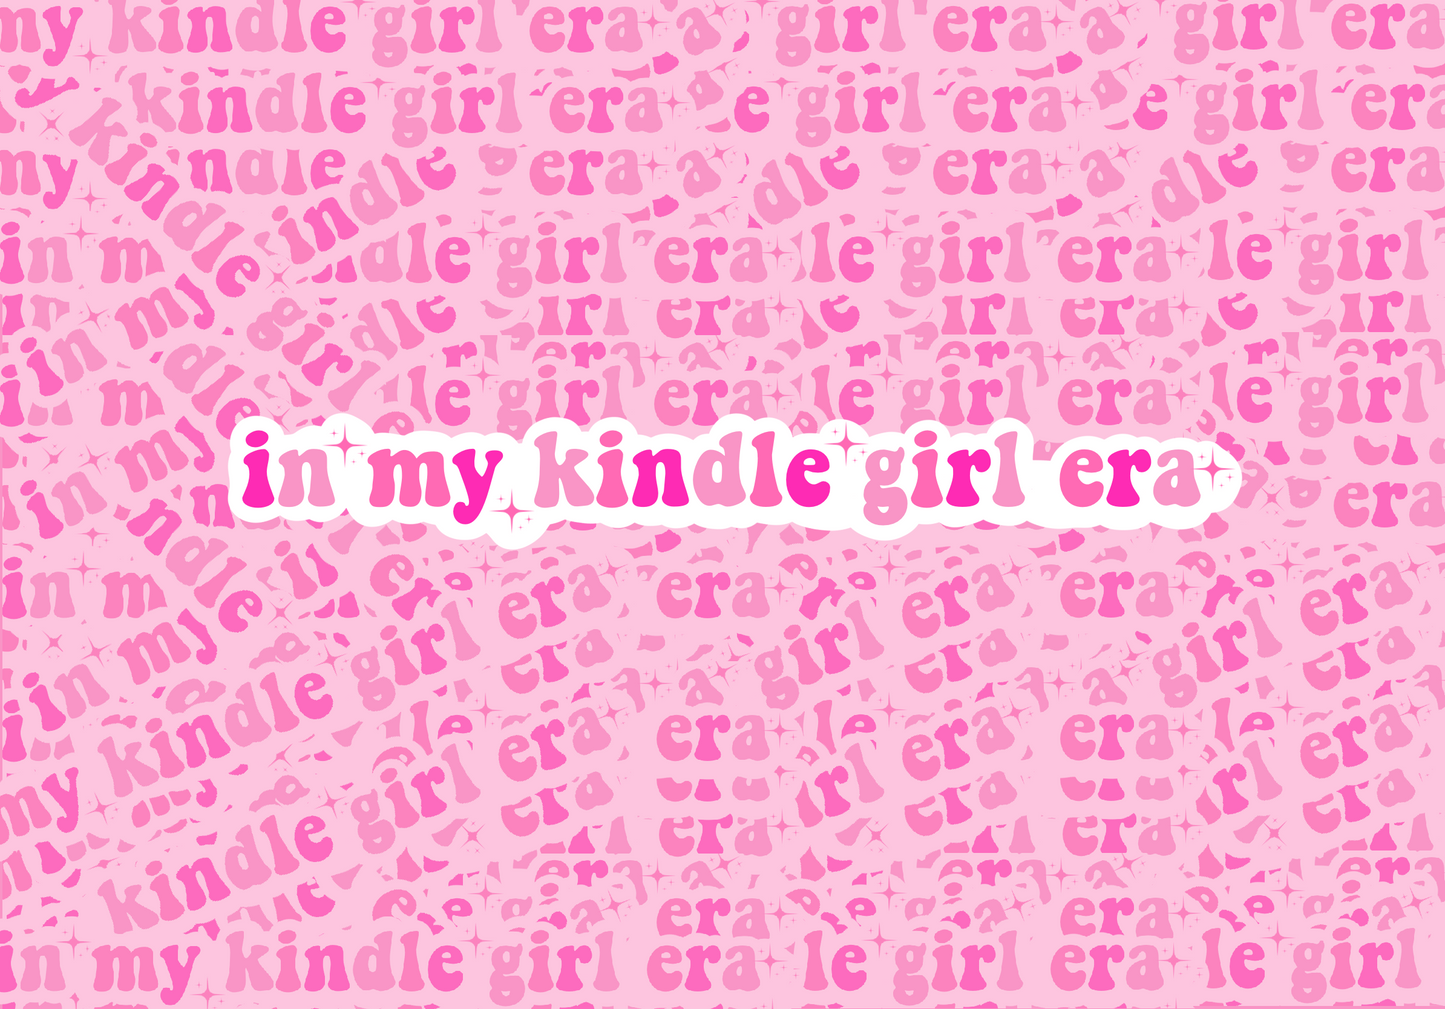 Kindle Girl Era Sticker